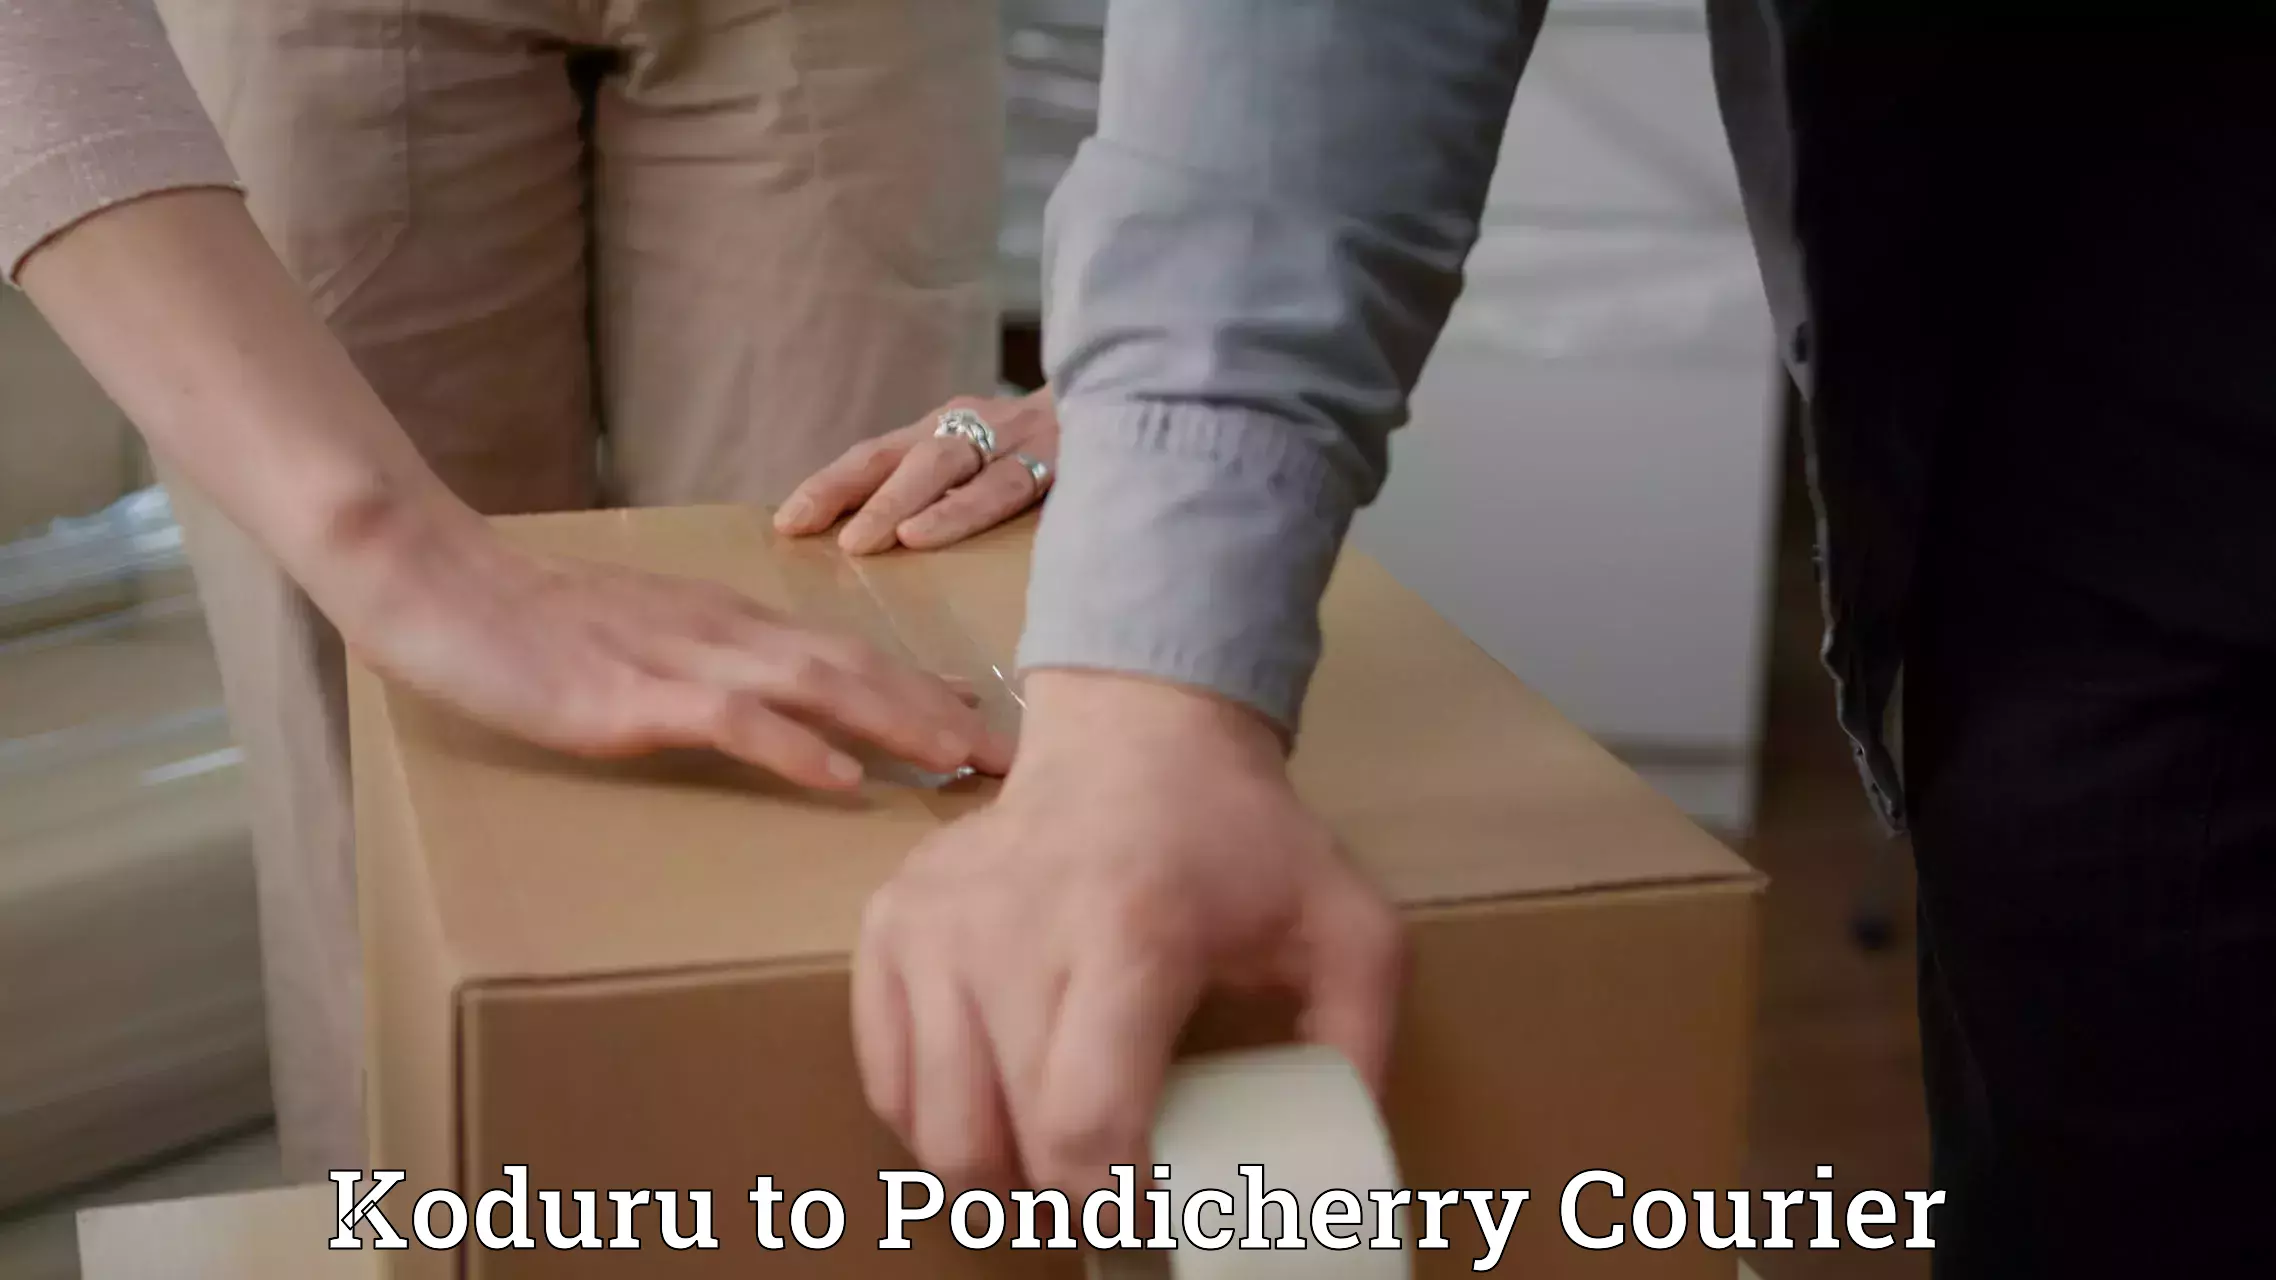 Parcel service for businesses Koduru to Pondicherry University